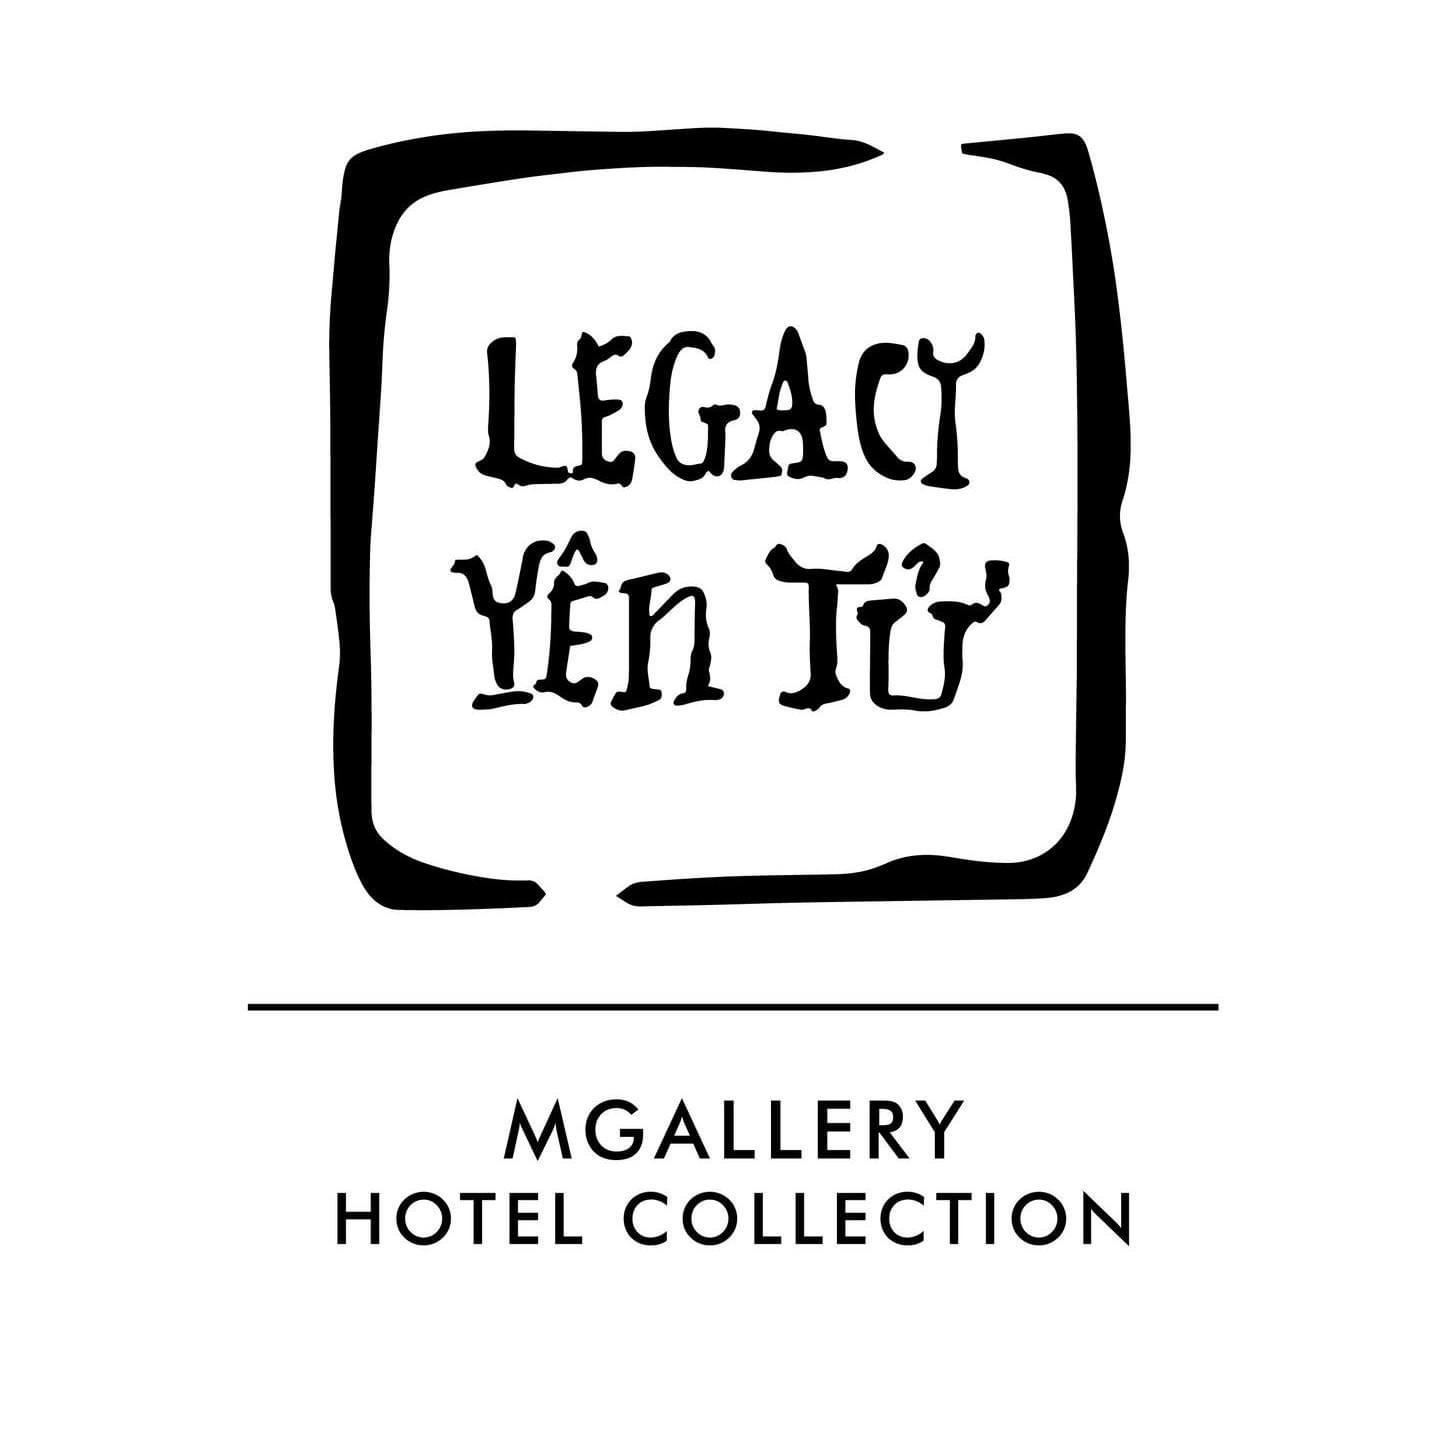  Legacy Yen Tu - MGallery